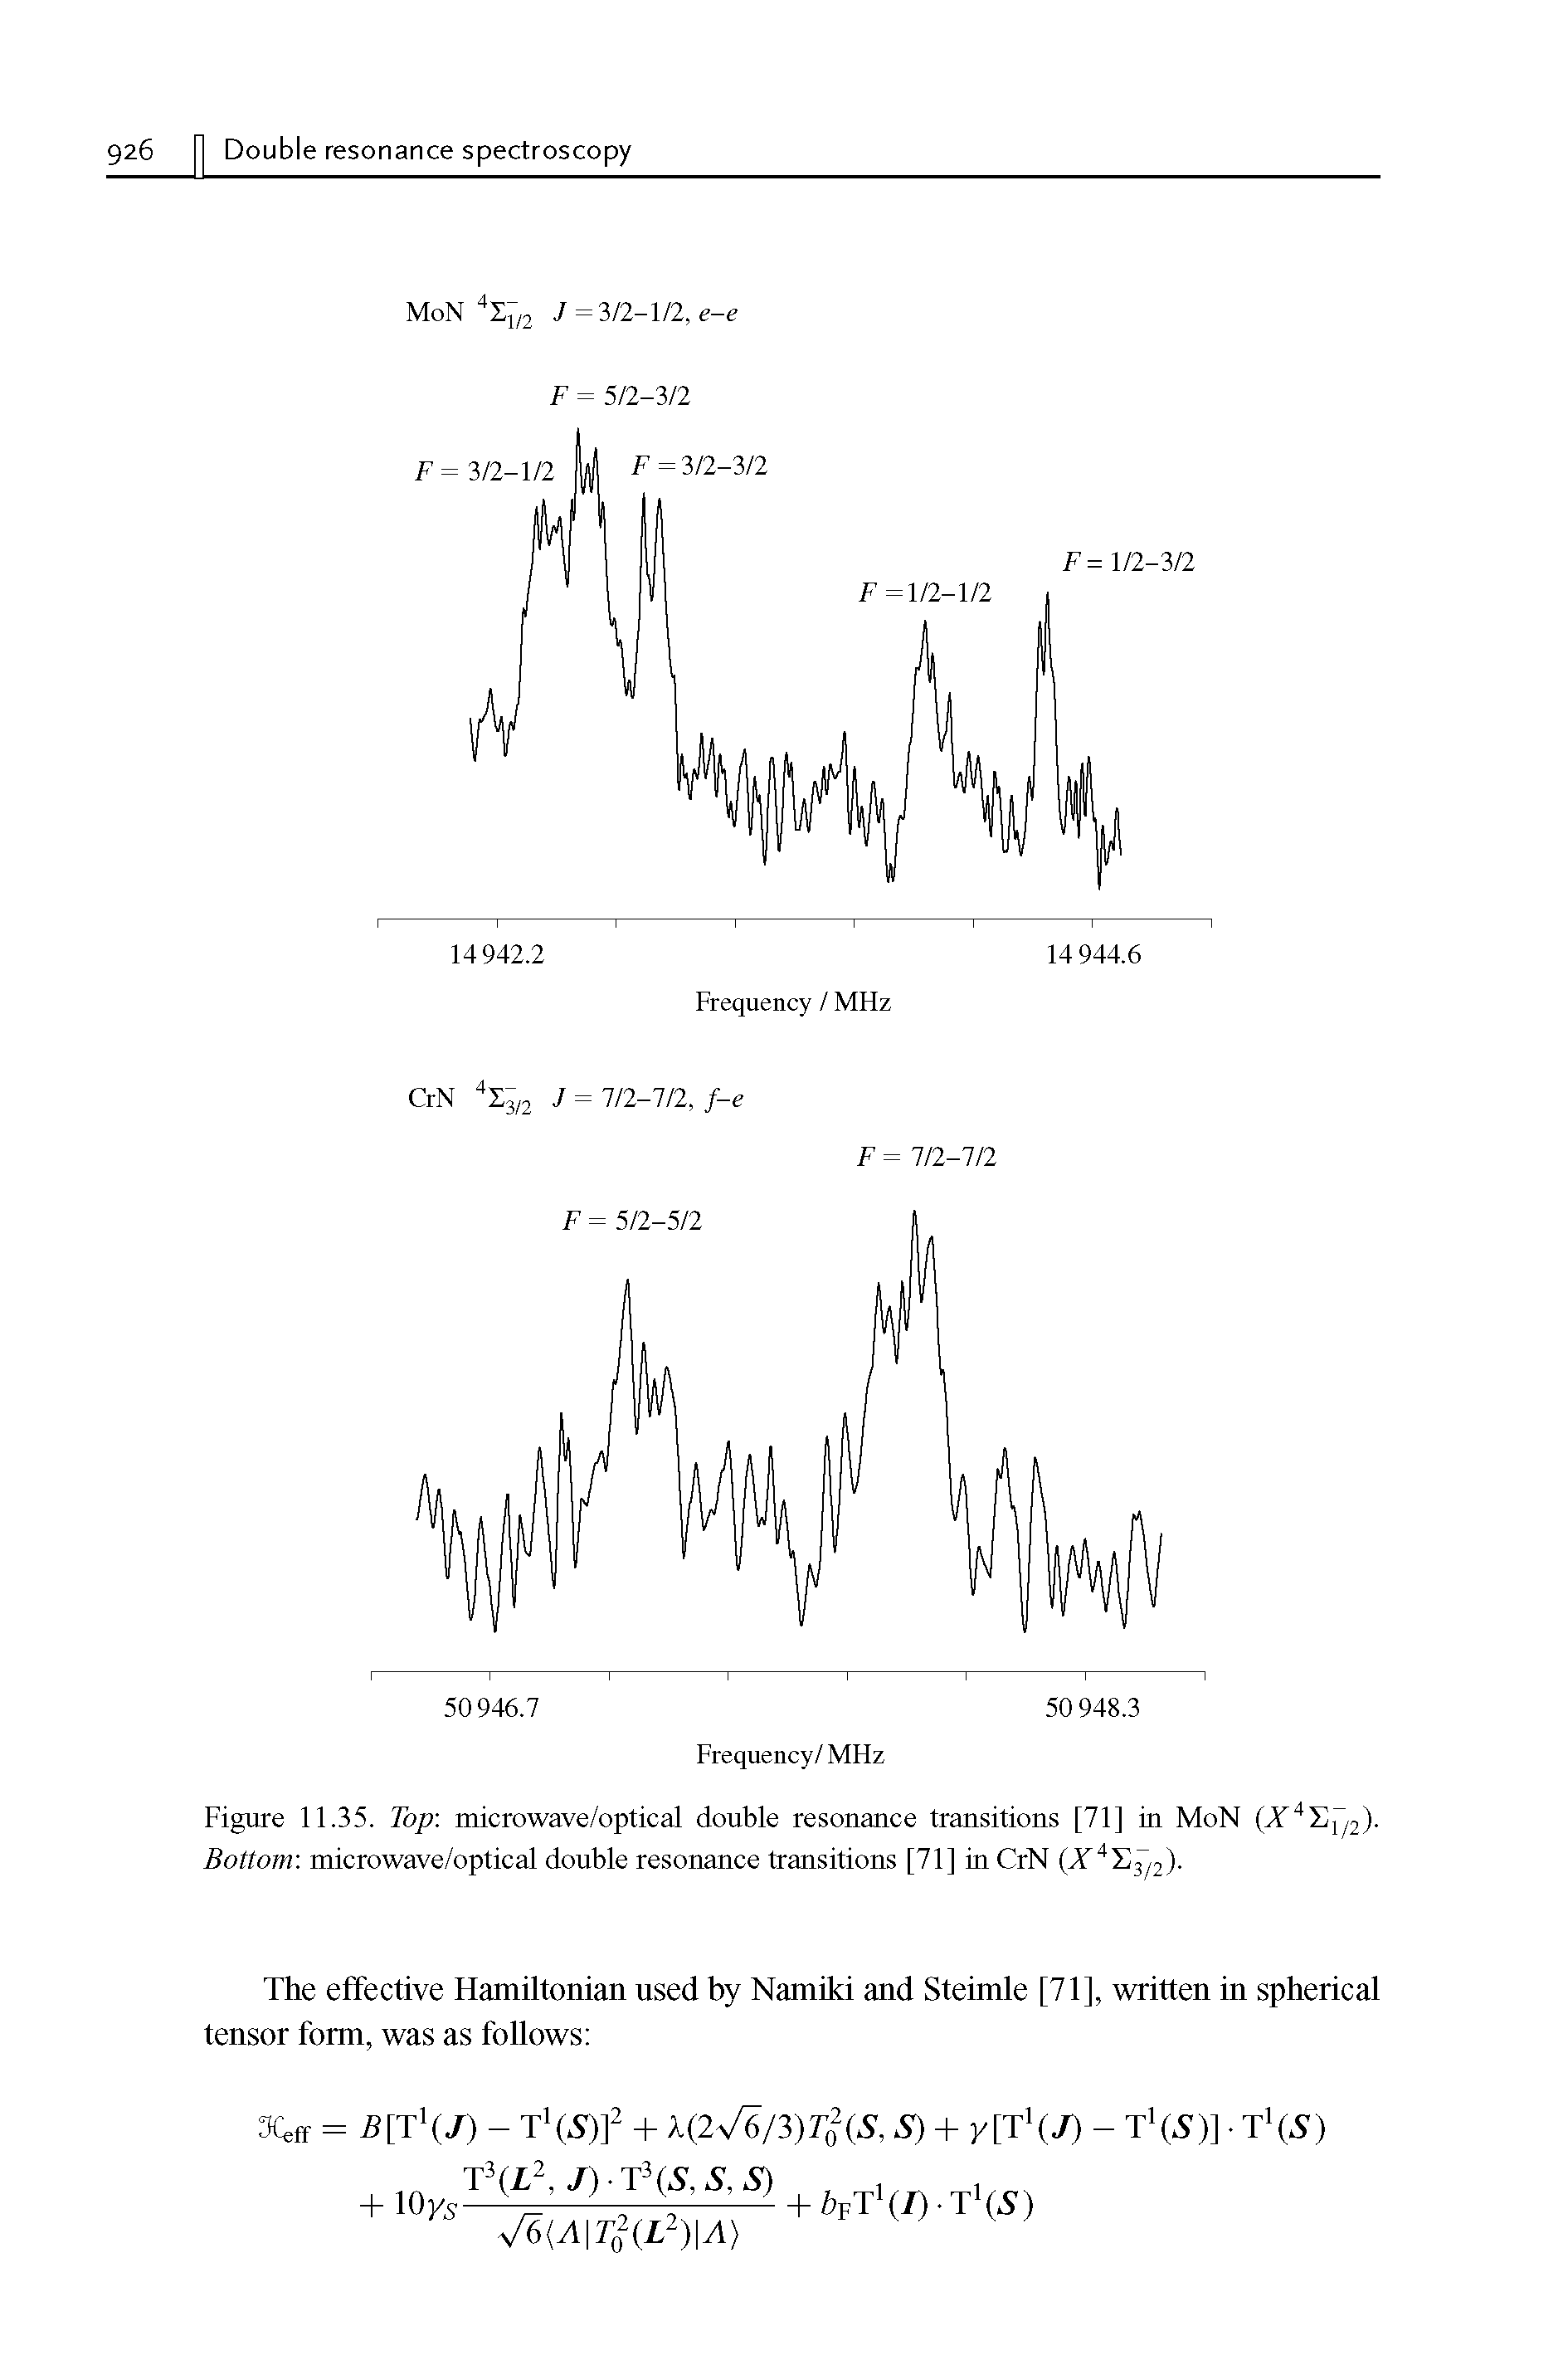 Figure 11.35. Top microwave/optical double resonance transitions [71] in MoN (X4 1/2). Bottom microwave/optical double resonance transitions [71] in CrN (X4E 2).